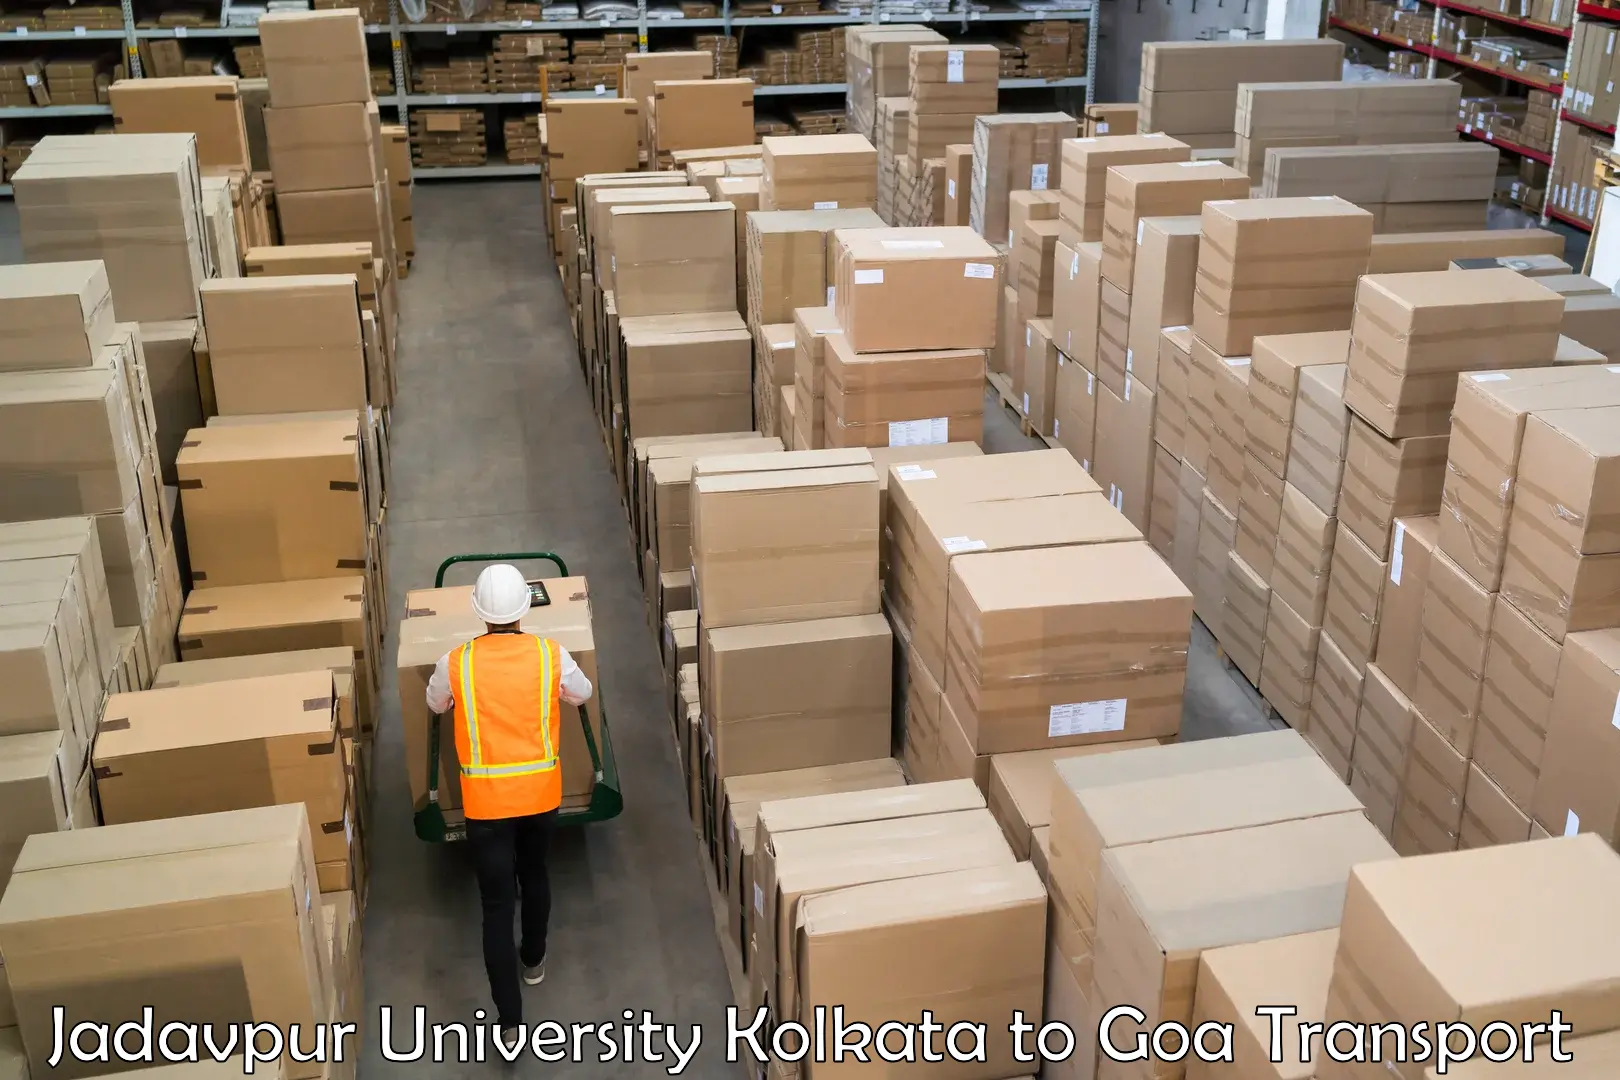 Truck transport companies in India Jadavpur University Kolkata to Canacona